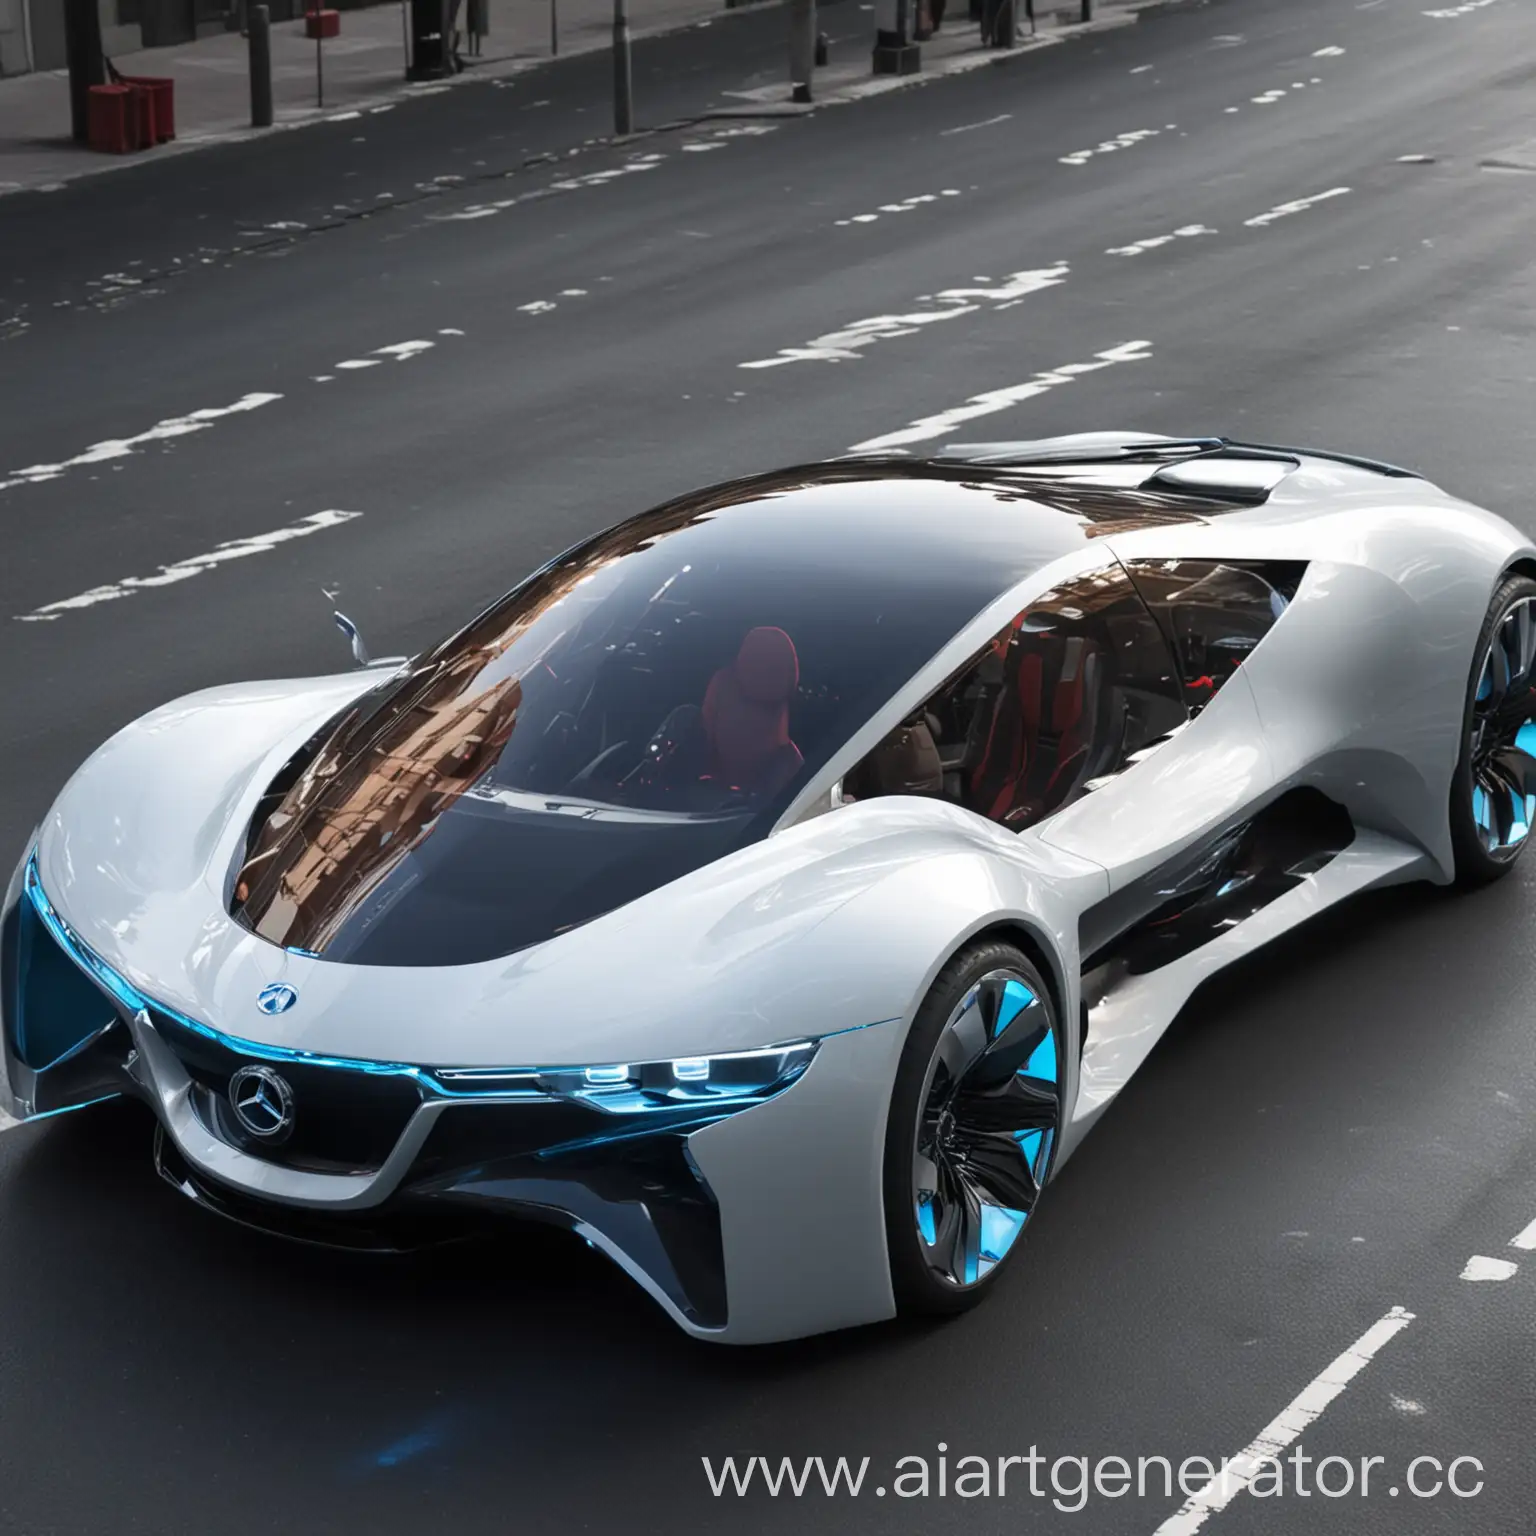 Futuristic-Automobile-Concept-Design